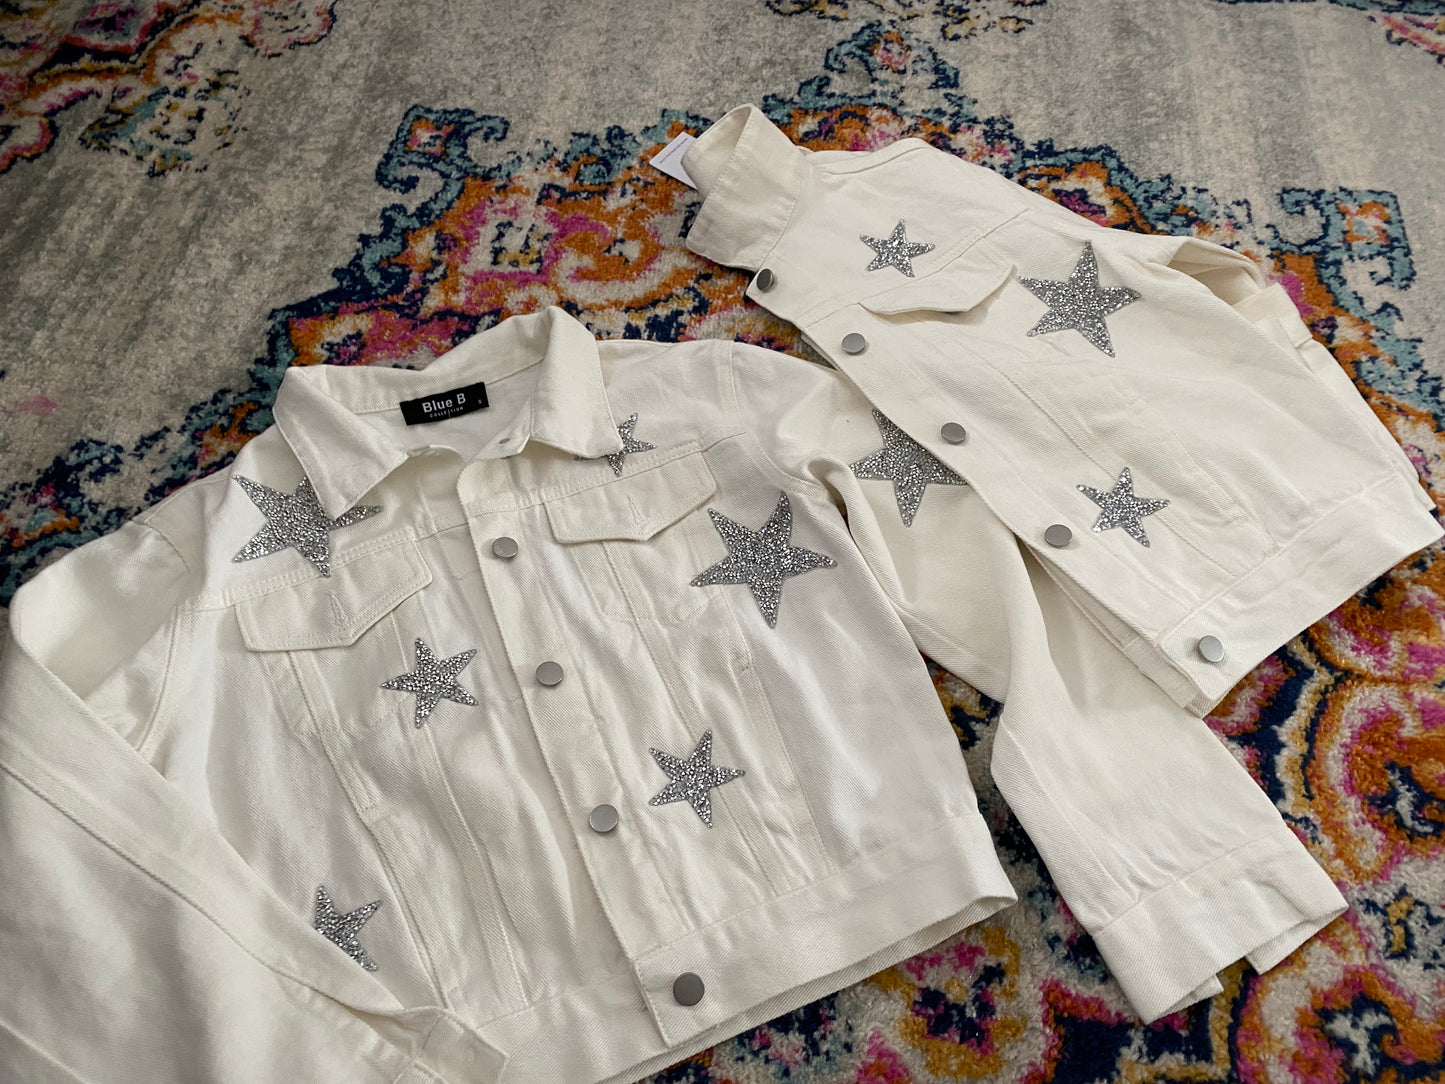 Rhinestone star jacket